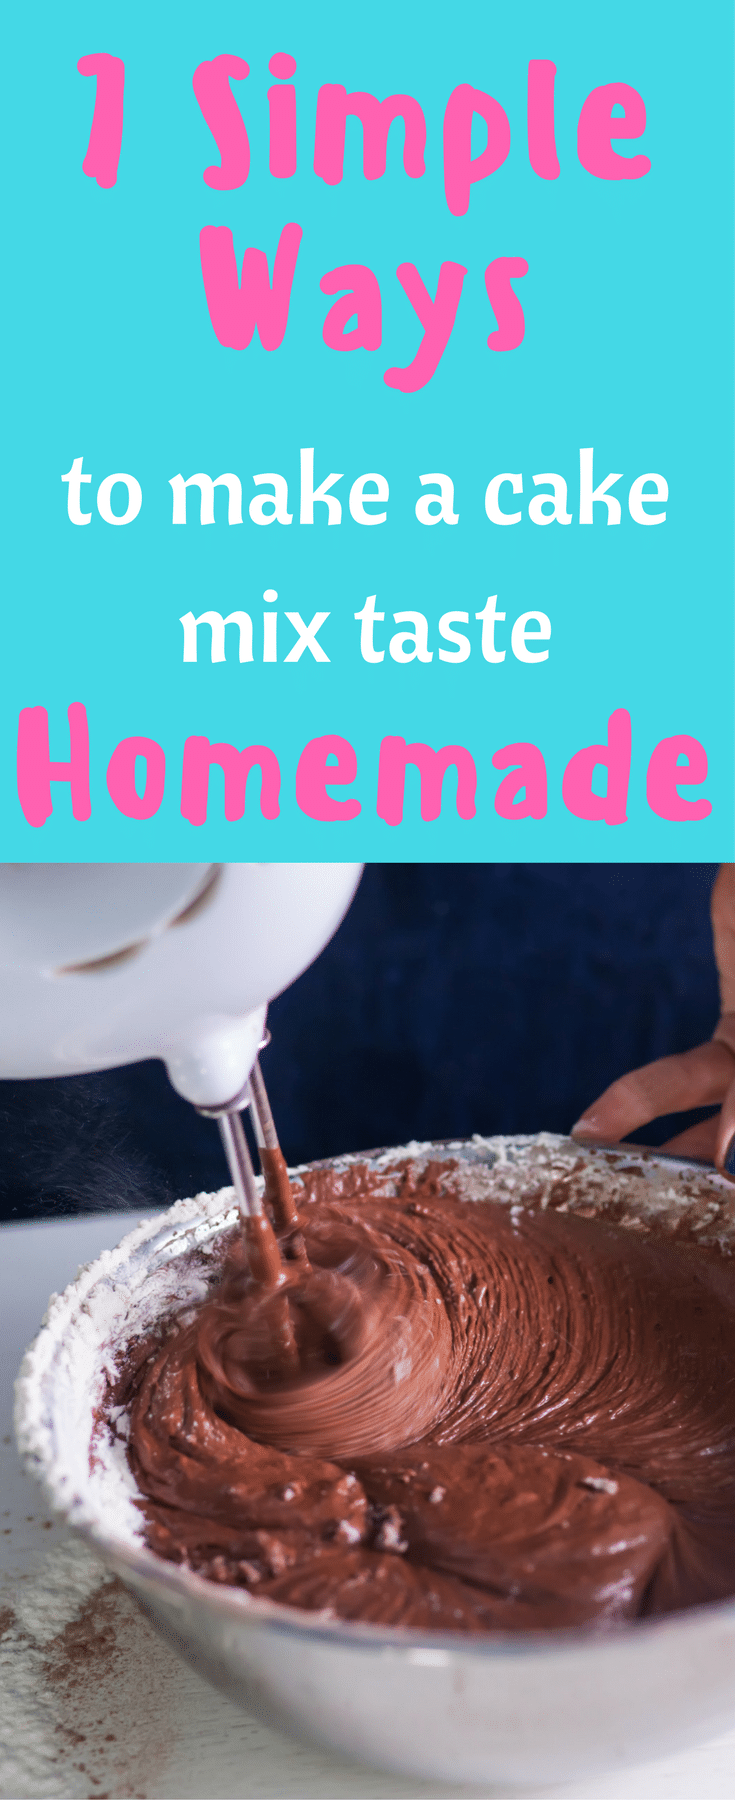 How to Make a Cake Mix Taste Homemade / Cake Mix / Homemade Cake / Kitchen Hacks / COoking Hacks / Baking 